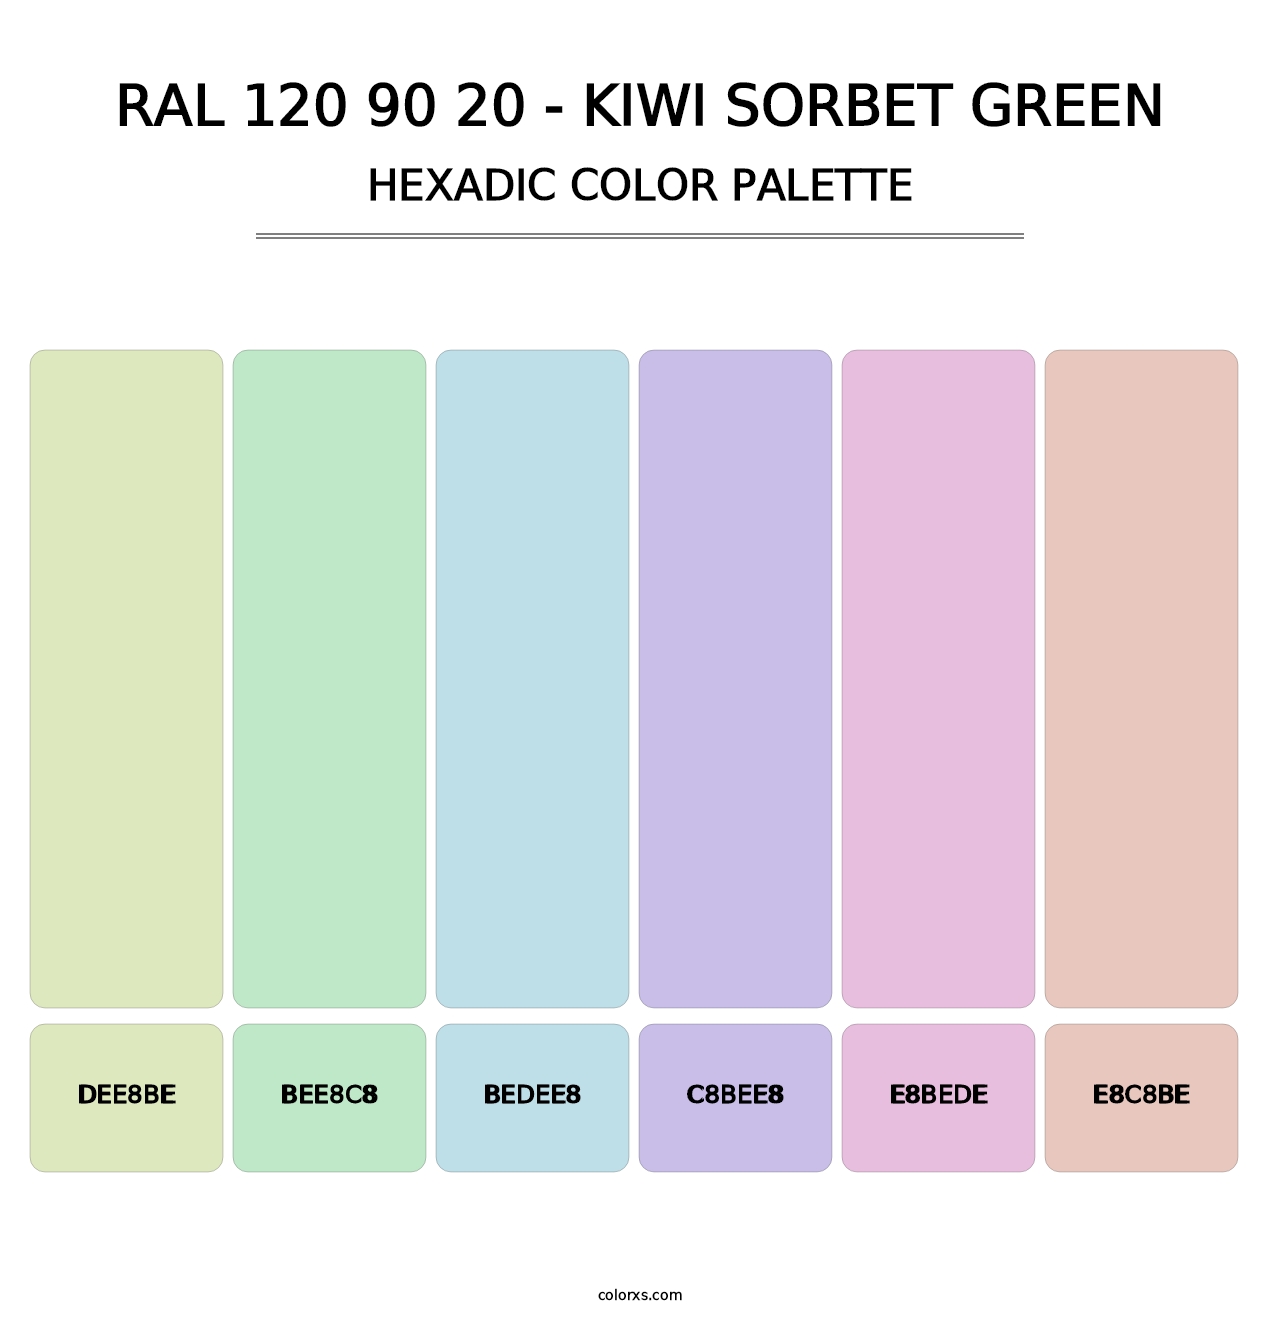 RAL 120 90 20 - Kiwi Sorbet Green - Hexadic Color Palette